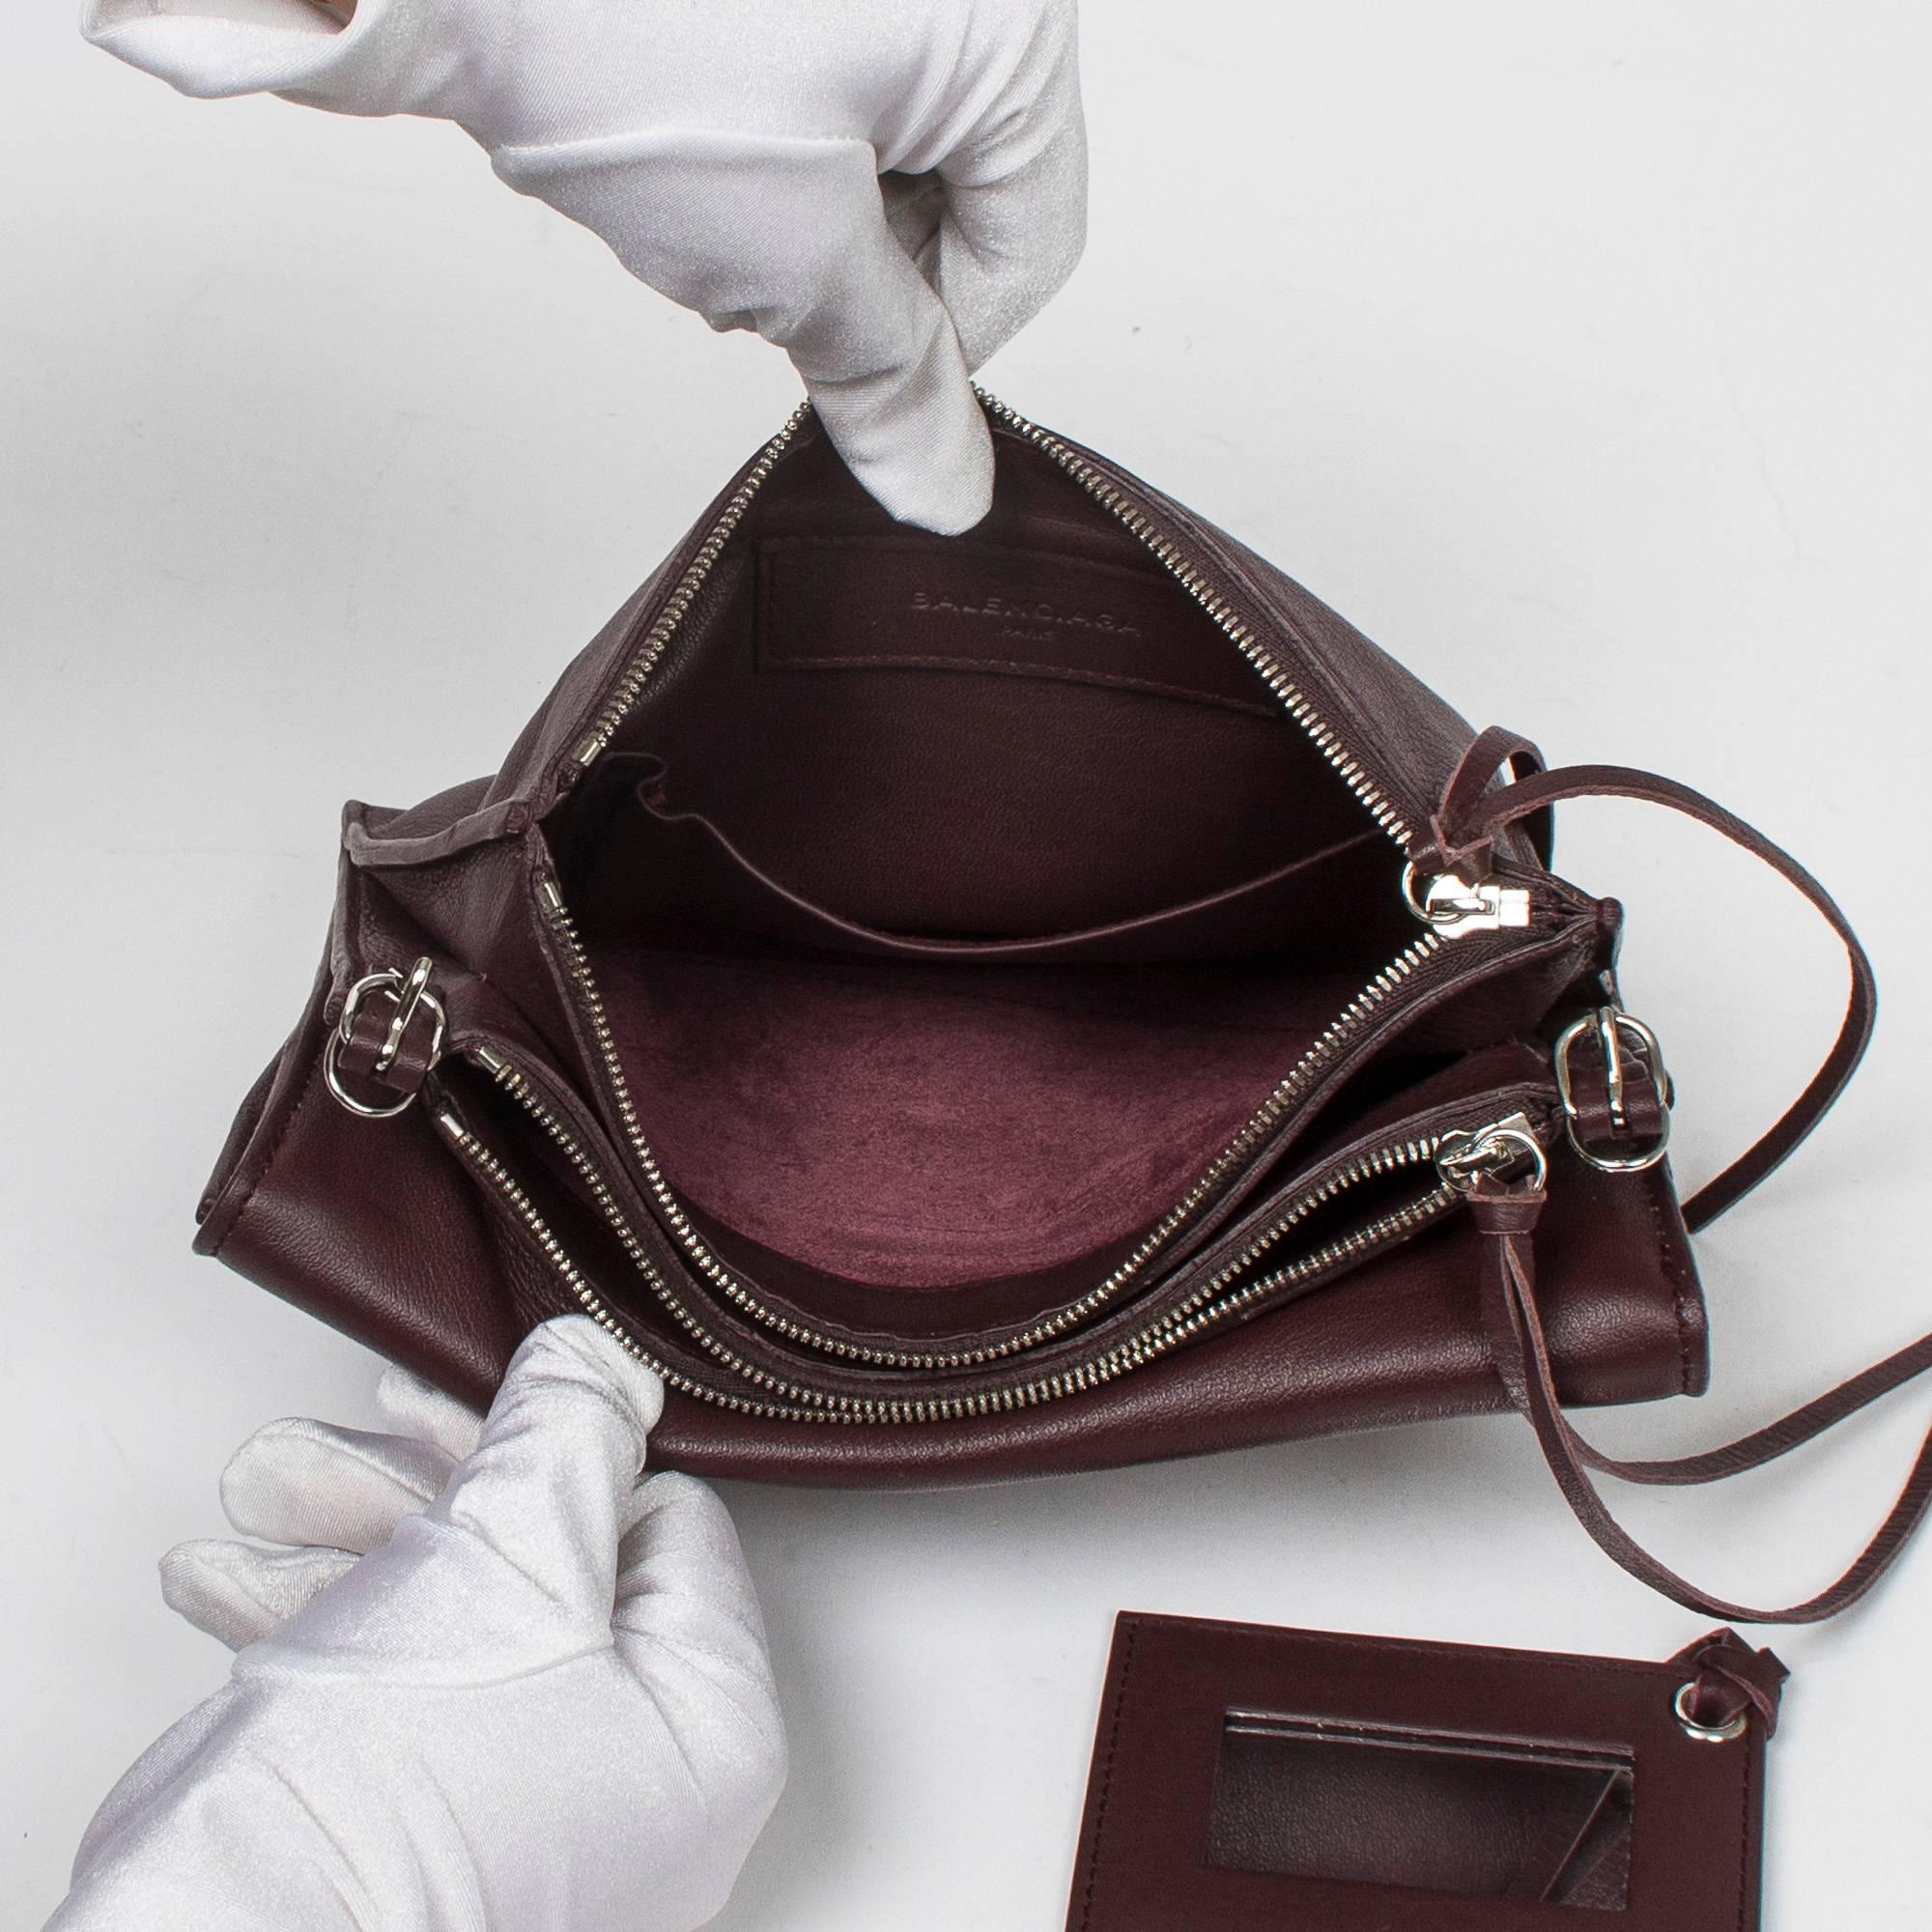 Women's Balenciaga Paper Envelope Crossbody bag in brown leather